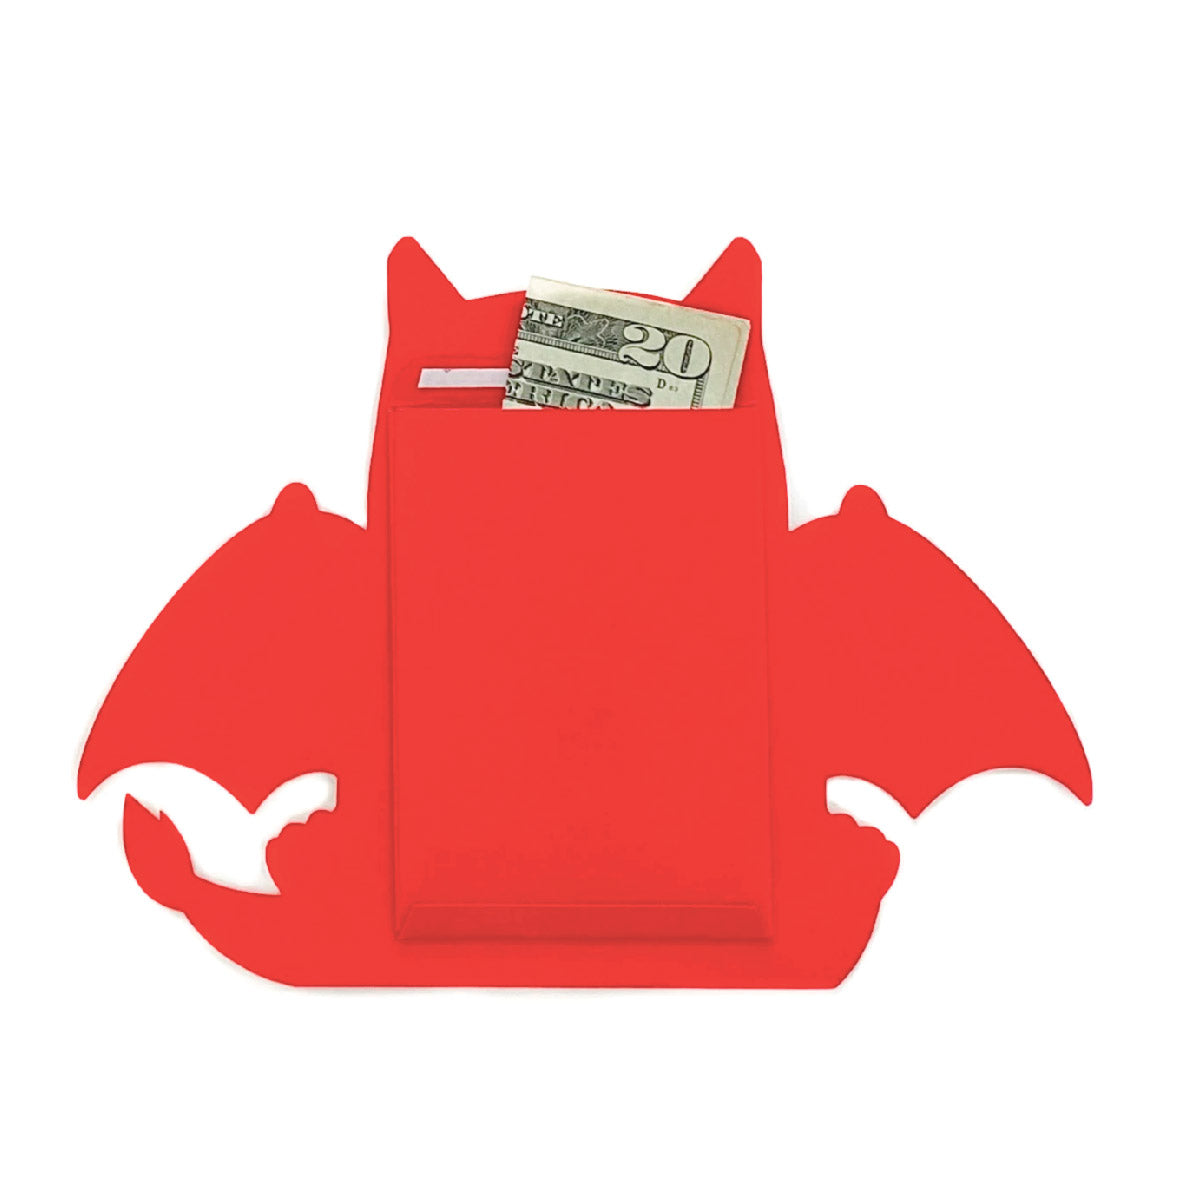 Chunkémon Charizard Red Envelope